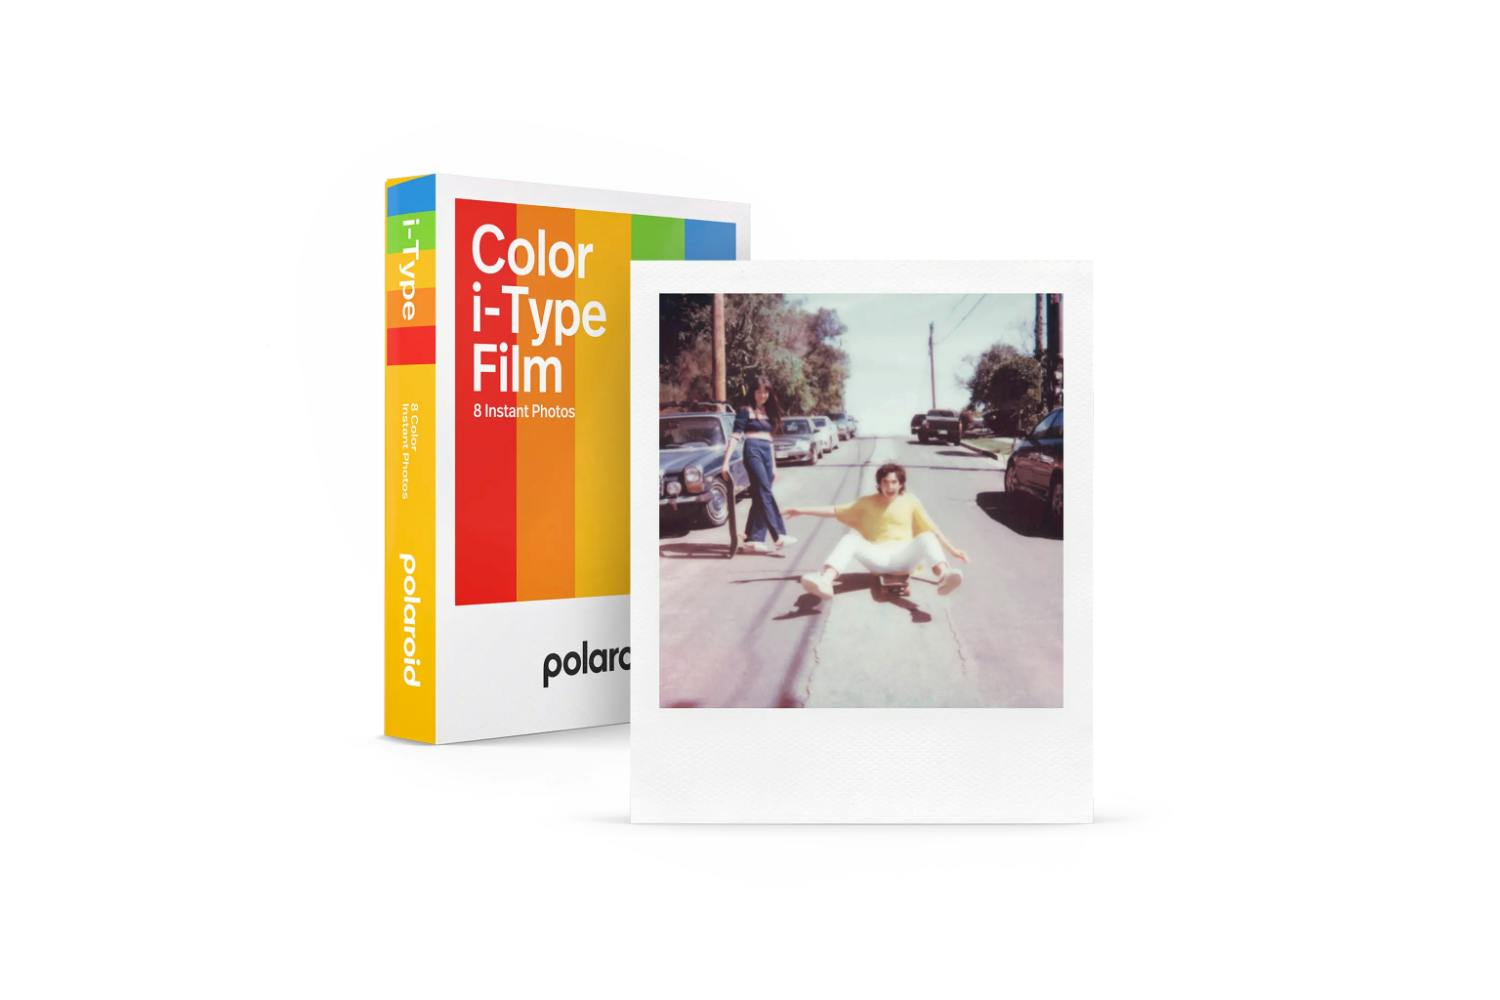 Polaroid Color i-Type Film | 1 Pack